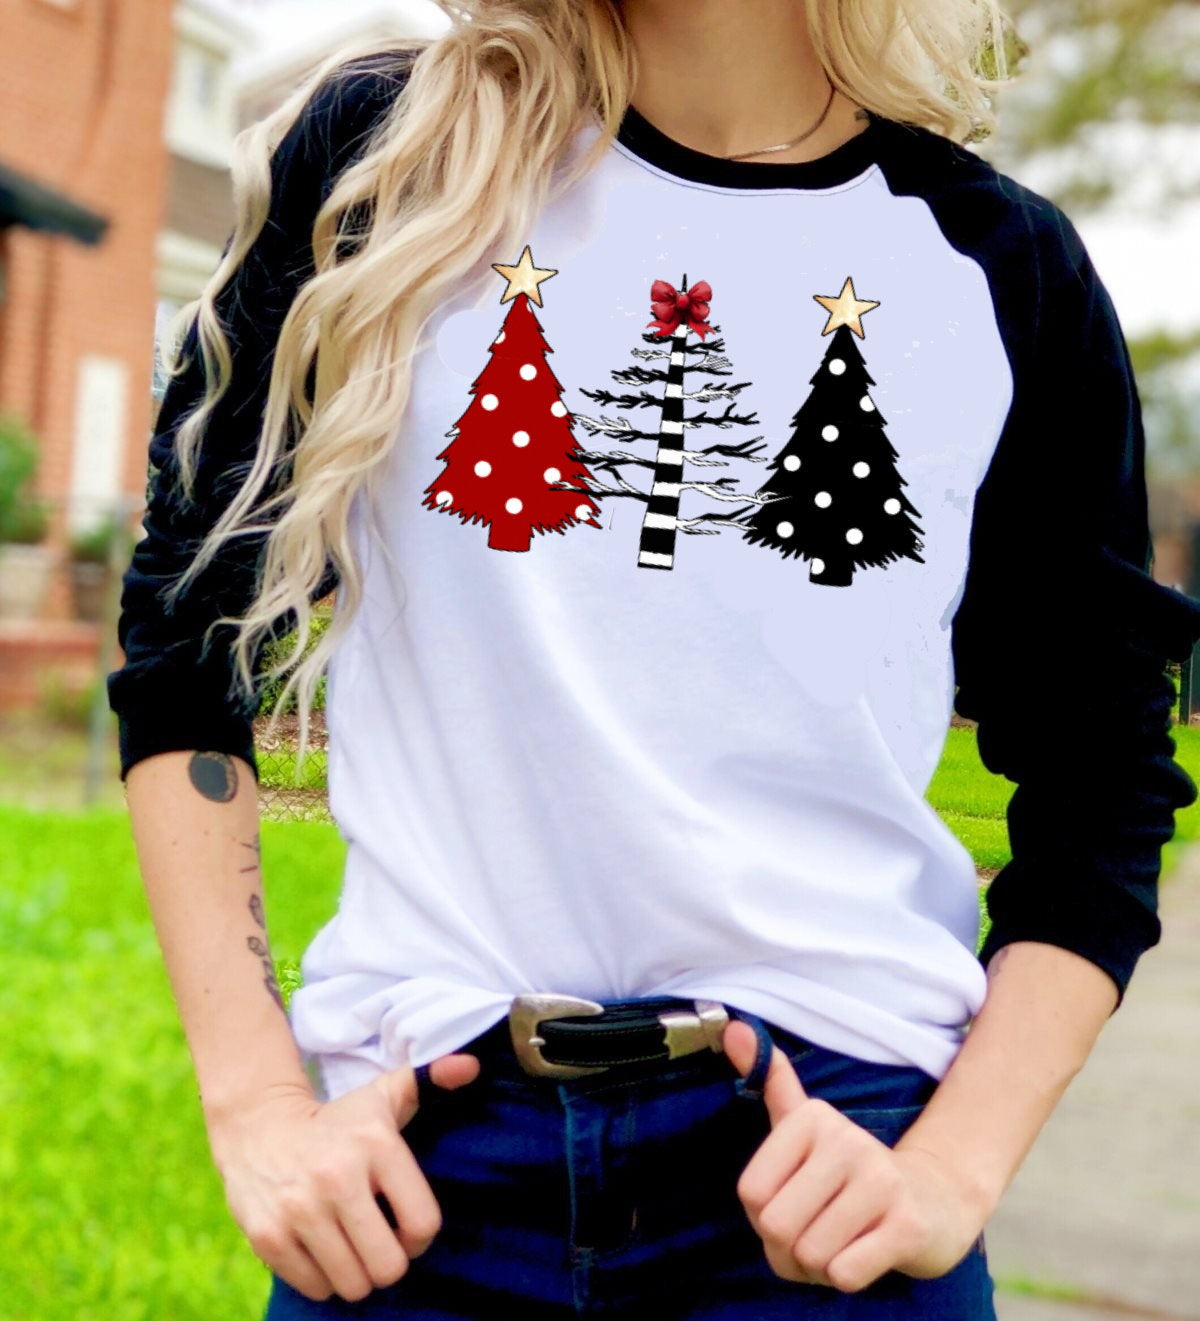 Wild Christmas Trees Polka Dots t-shirt Raglan shirt Novelty Graphic Tee T-Shirt Raglan